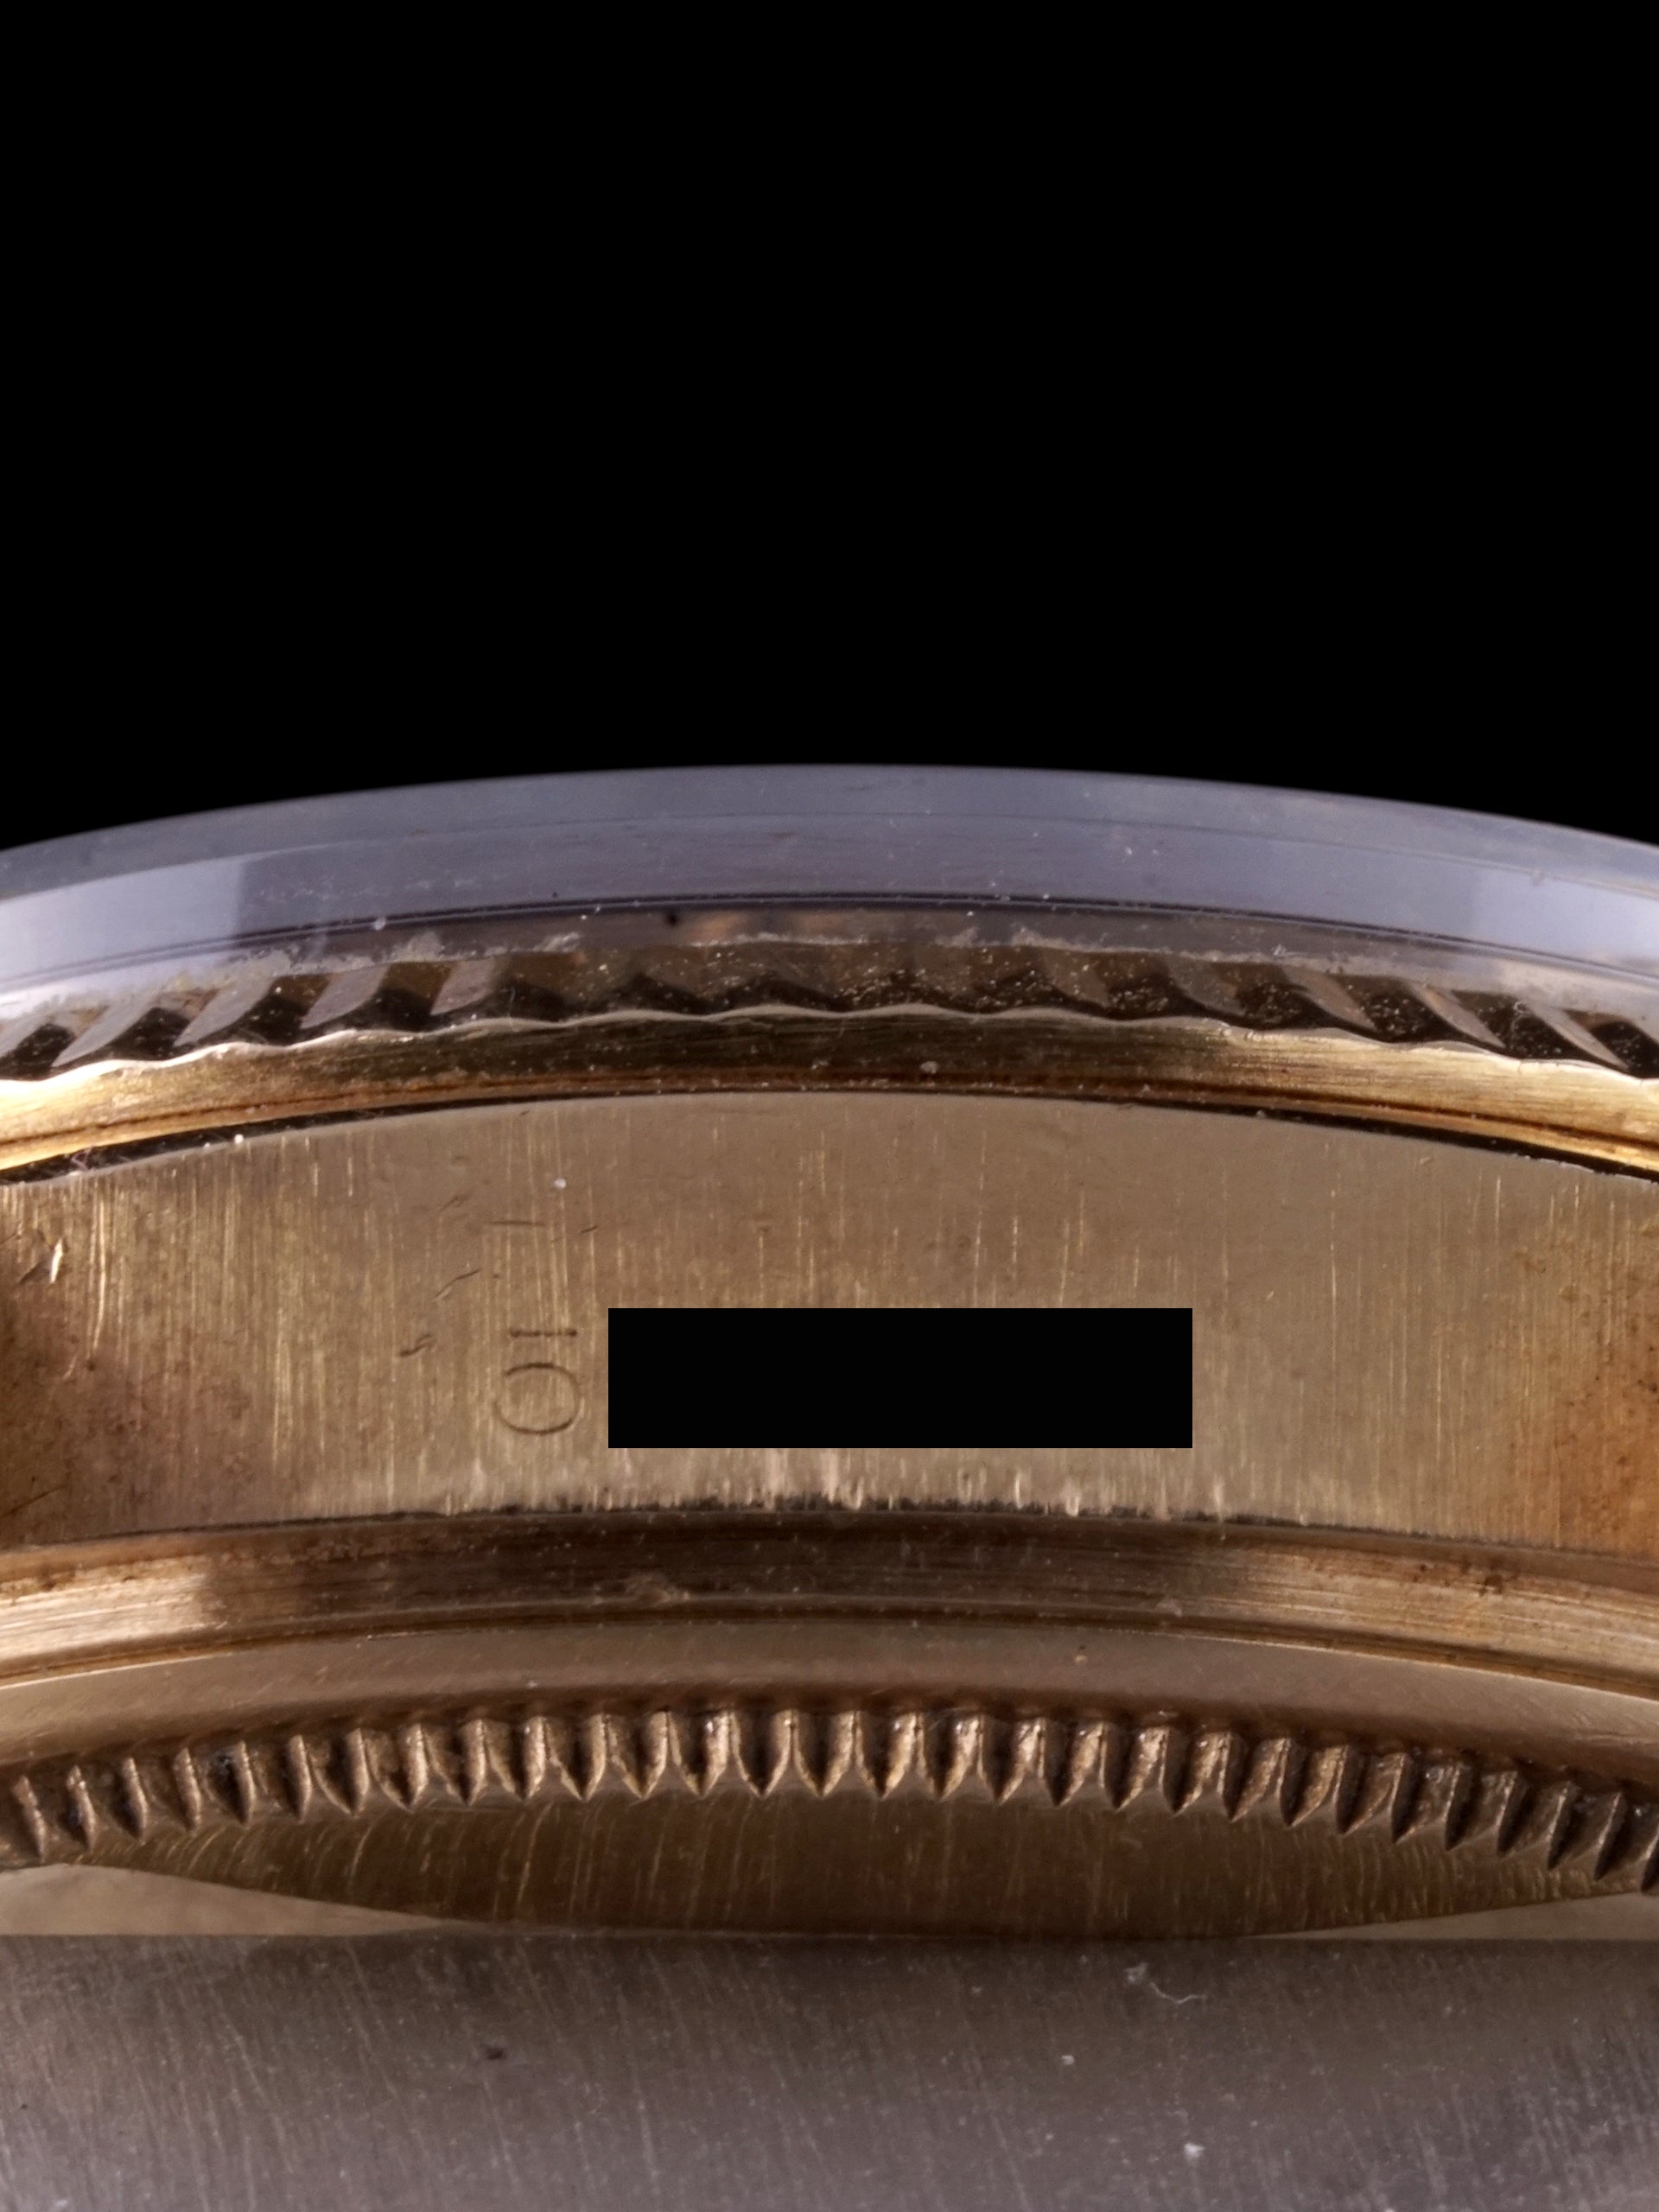 1967 Rolex Day-Date (Ref. 1803) 18K YG "Non-Luminous Dial"